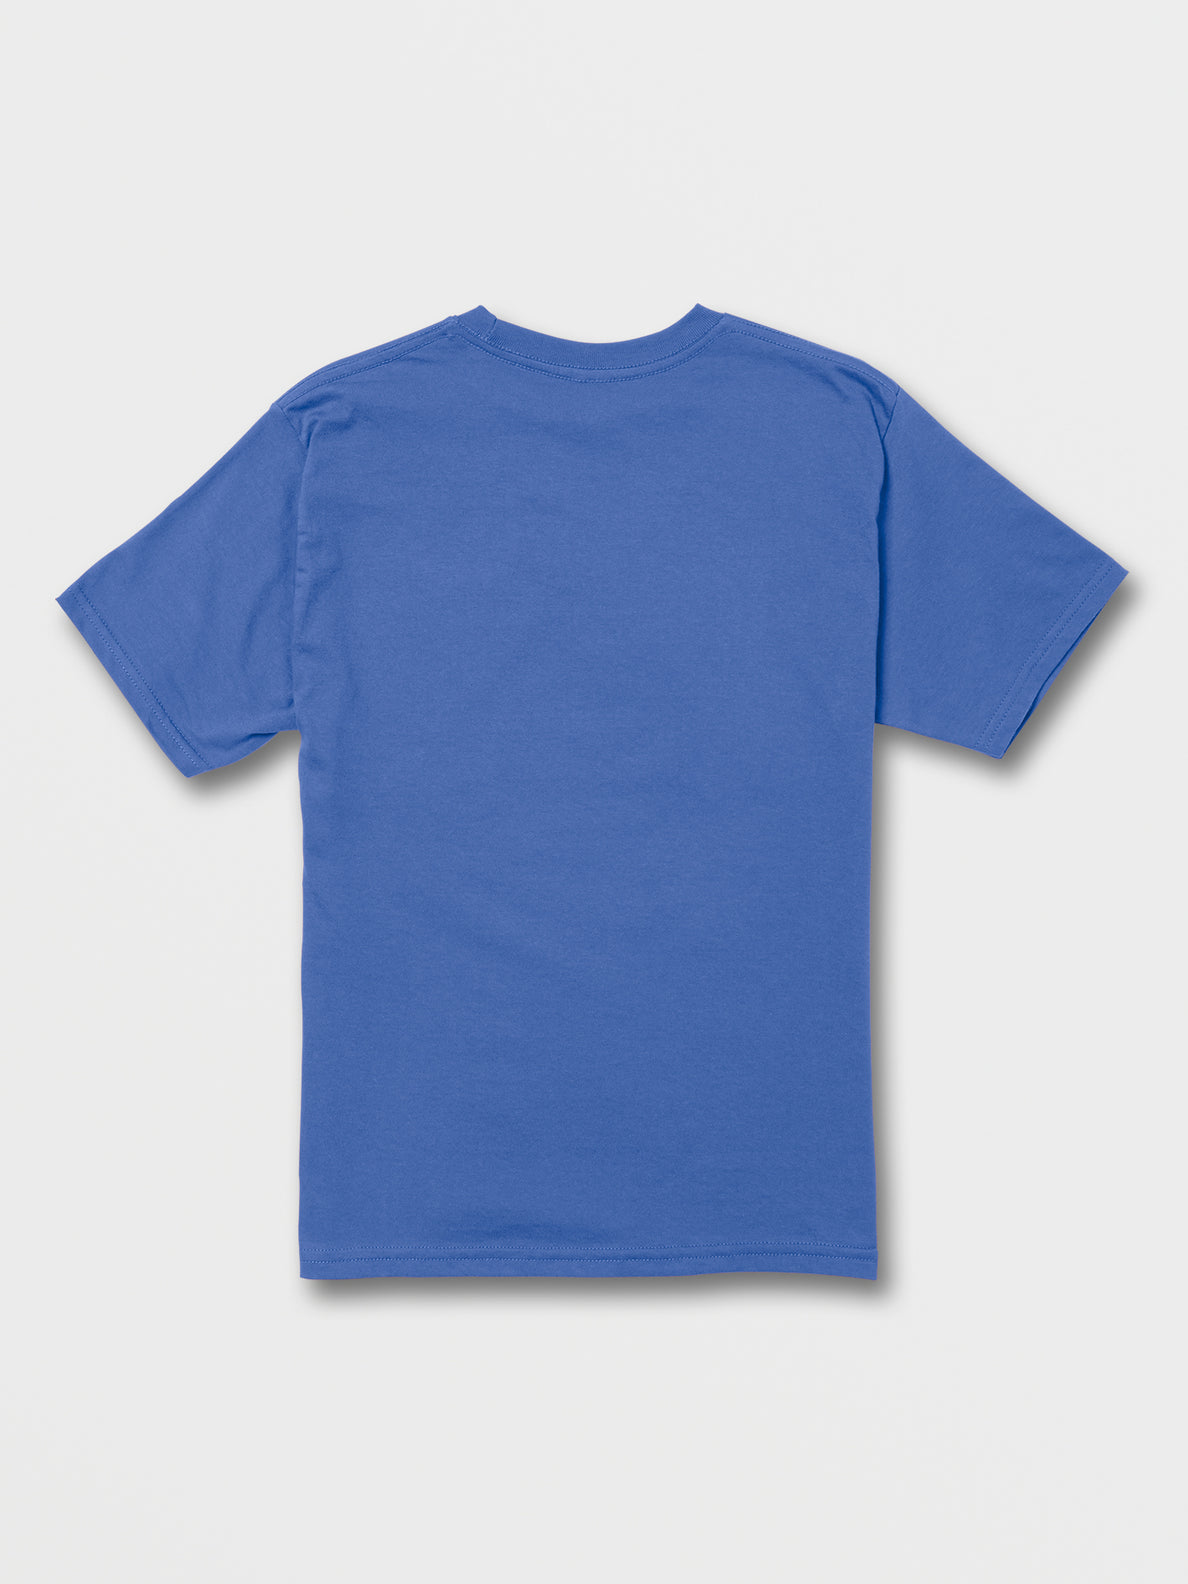 Little Boys Buds On Board Short Sleeve Tee - Marina Blue (Y3532236_MRB) [B]